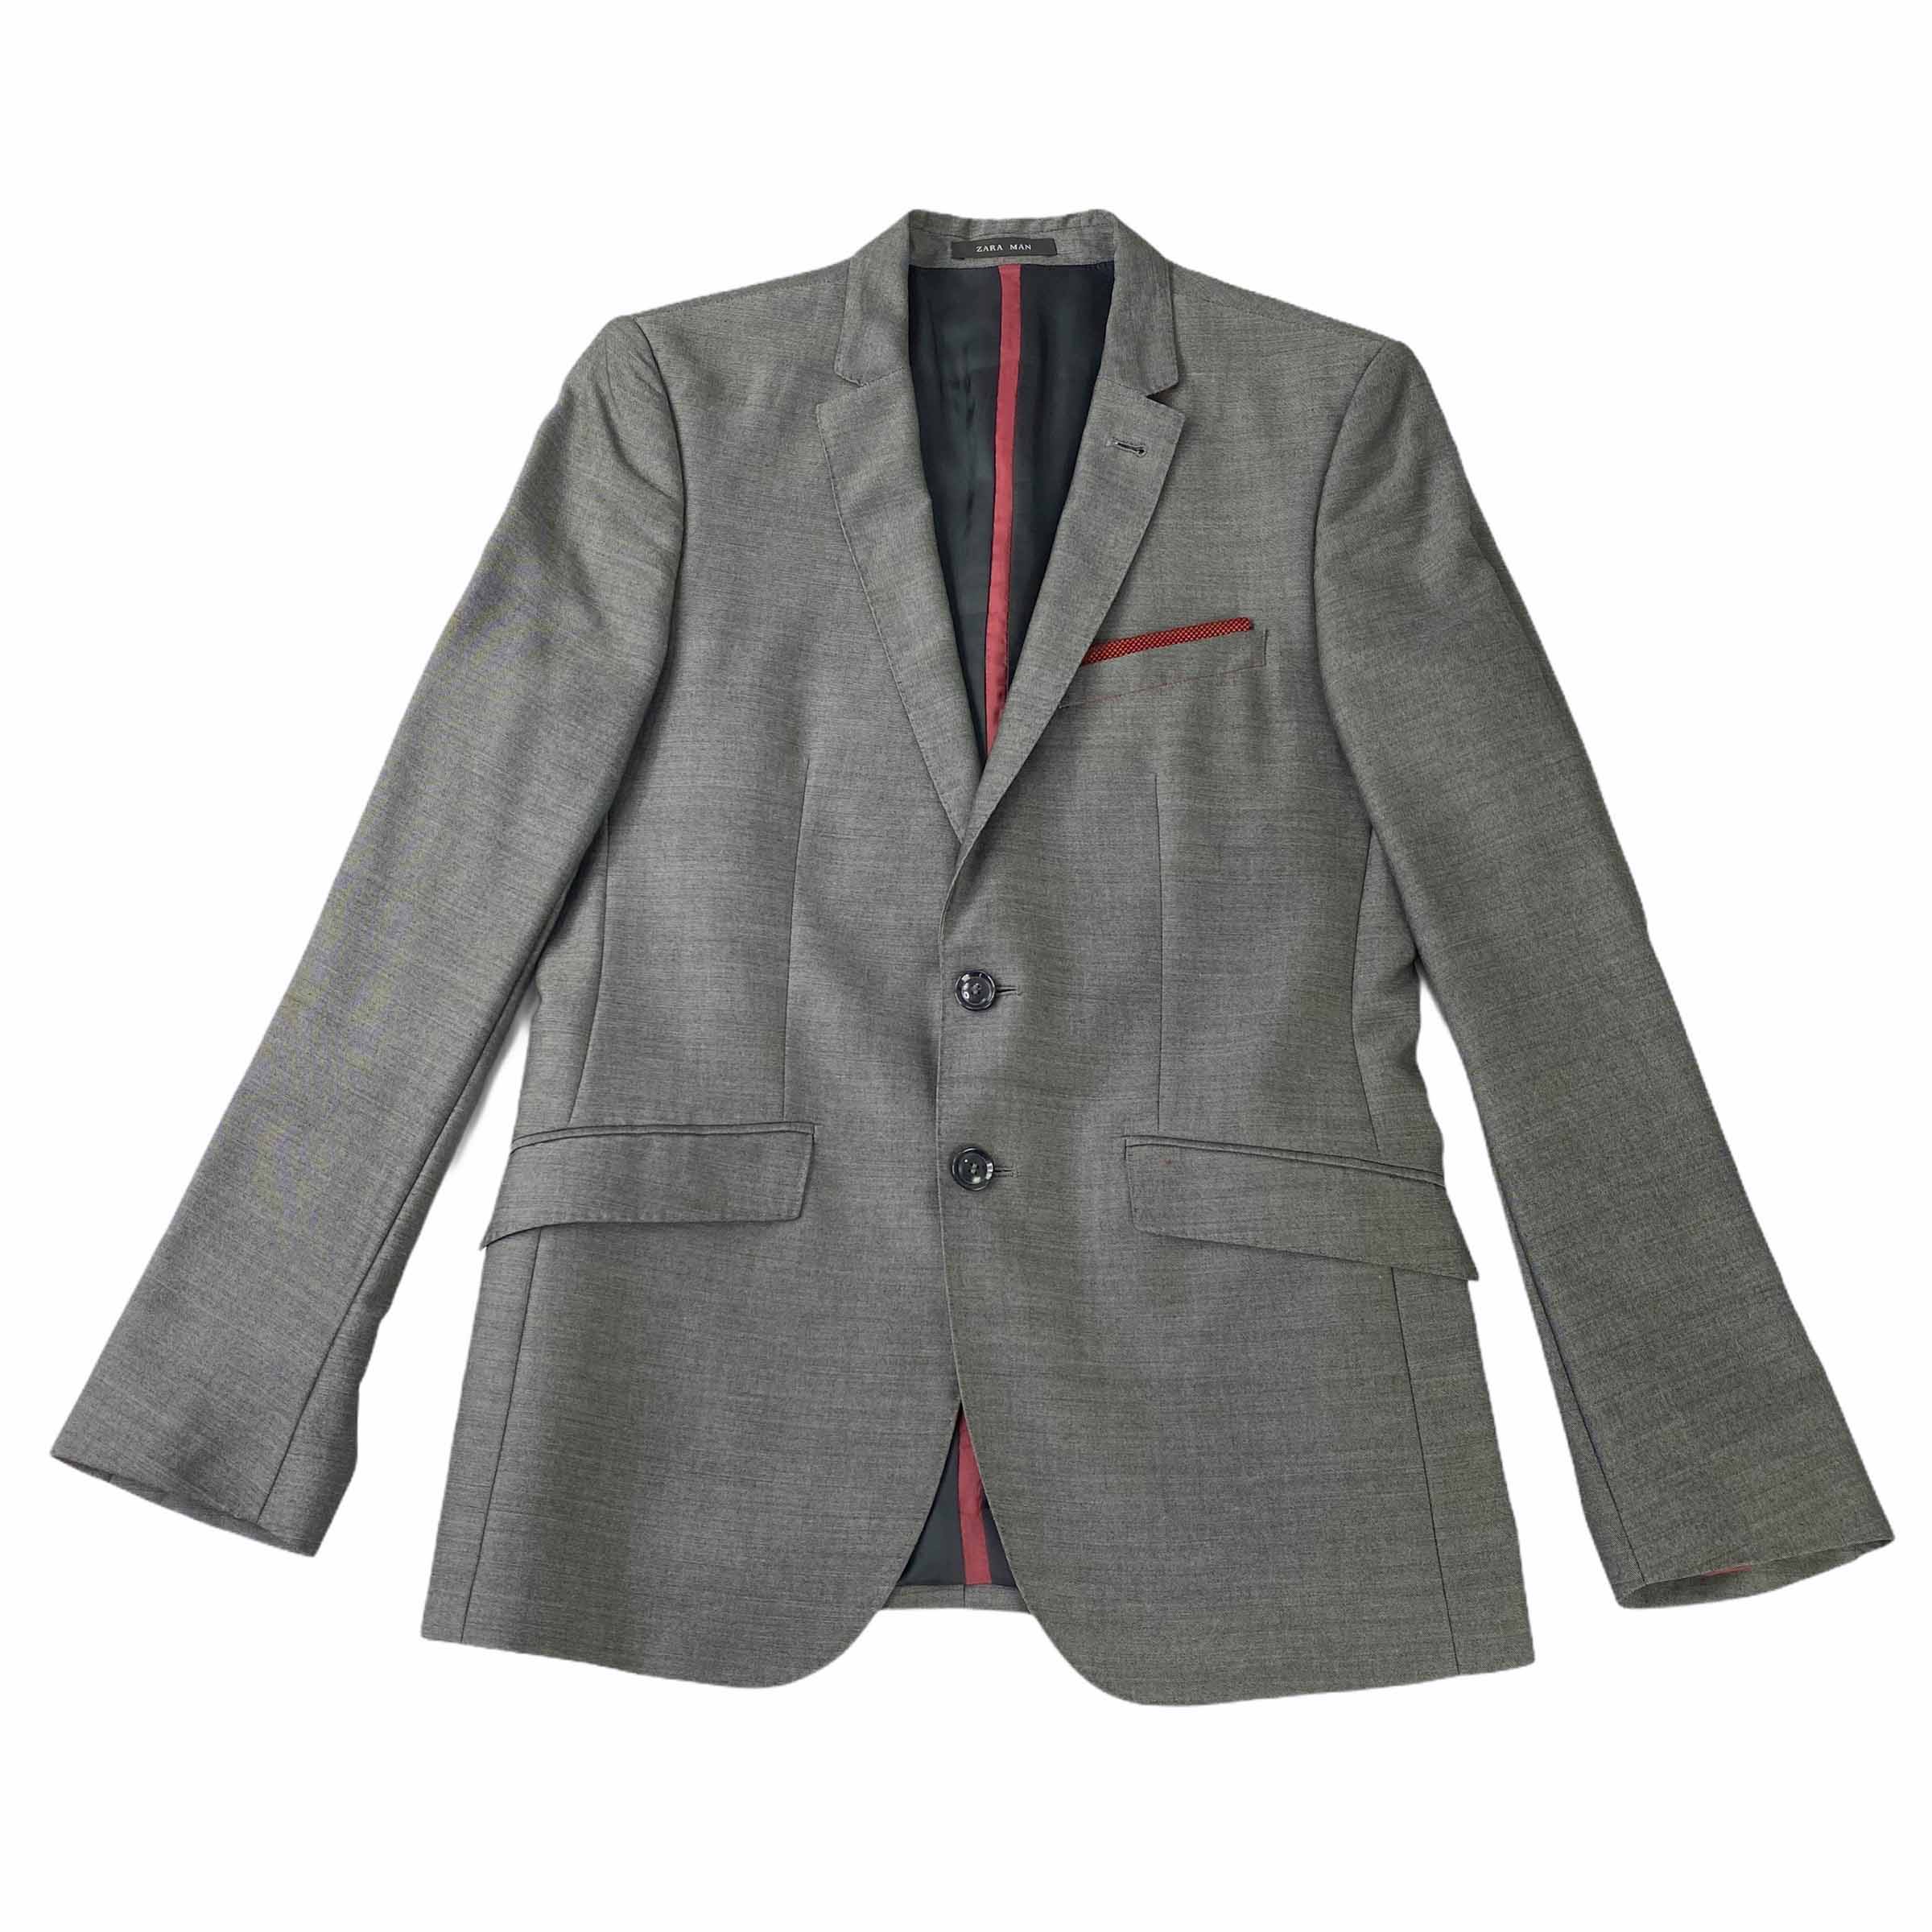 [Zara] Tailored Fit Gray Jacket - Size 46